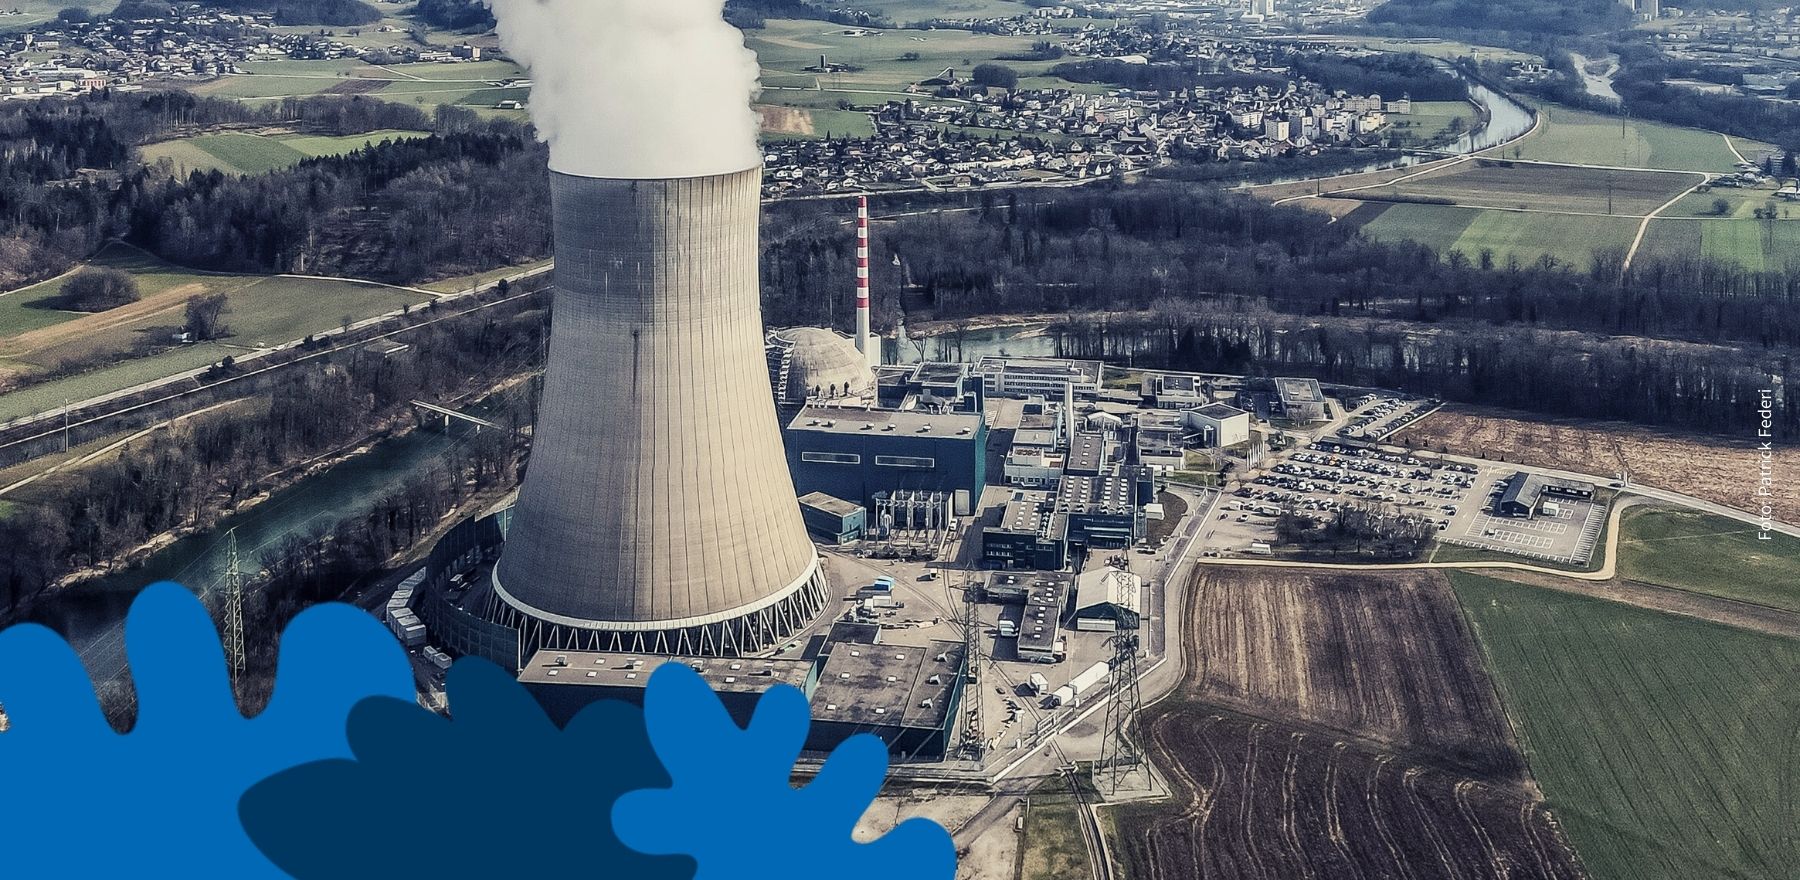 Atomkraft - bald "nachhaltig" dank EU-Taxonomie?